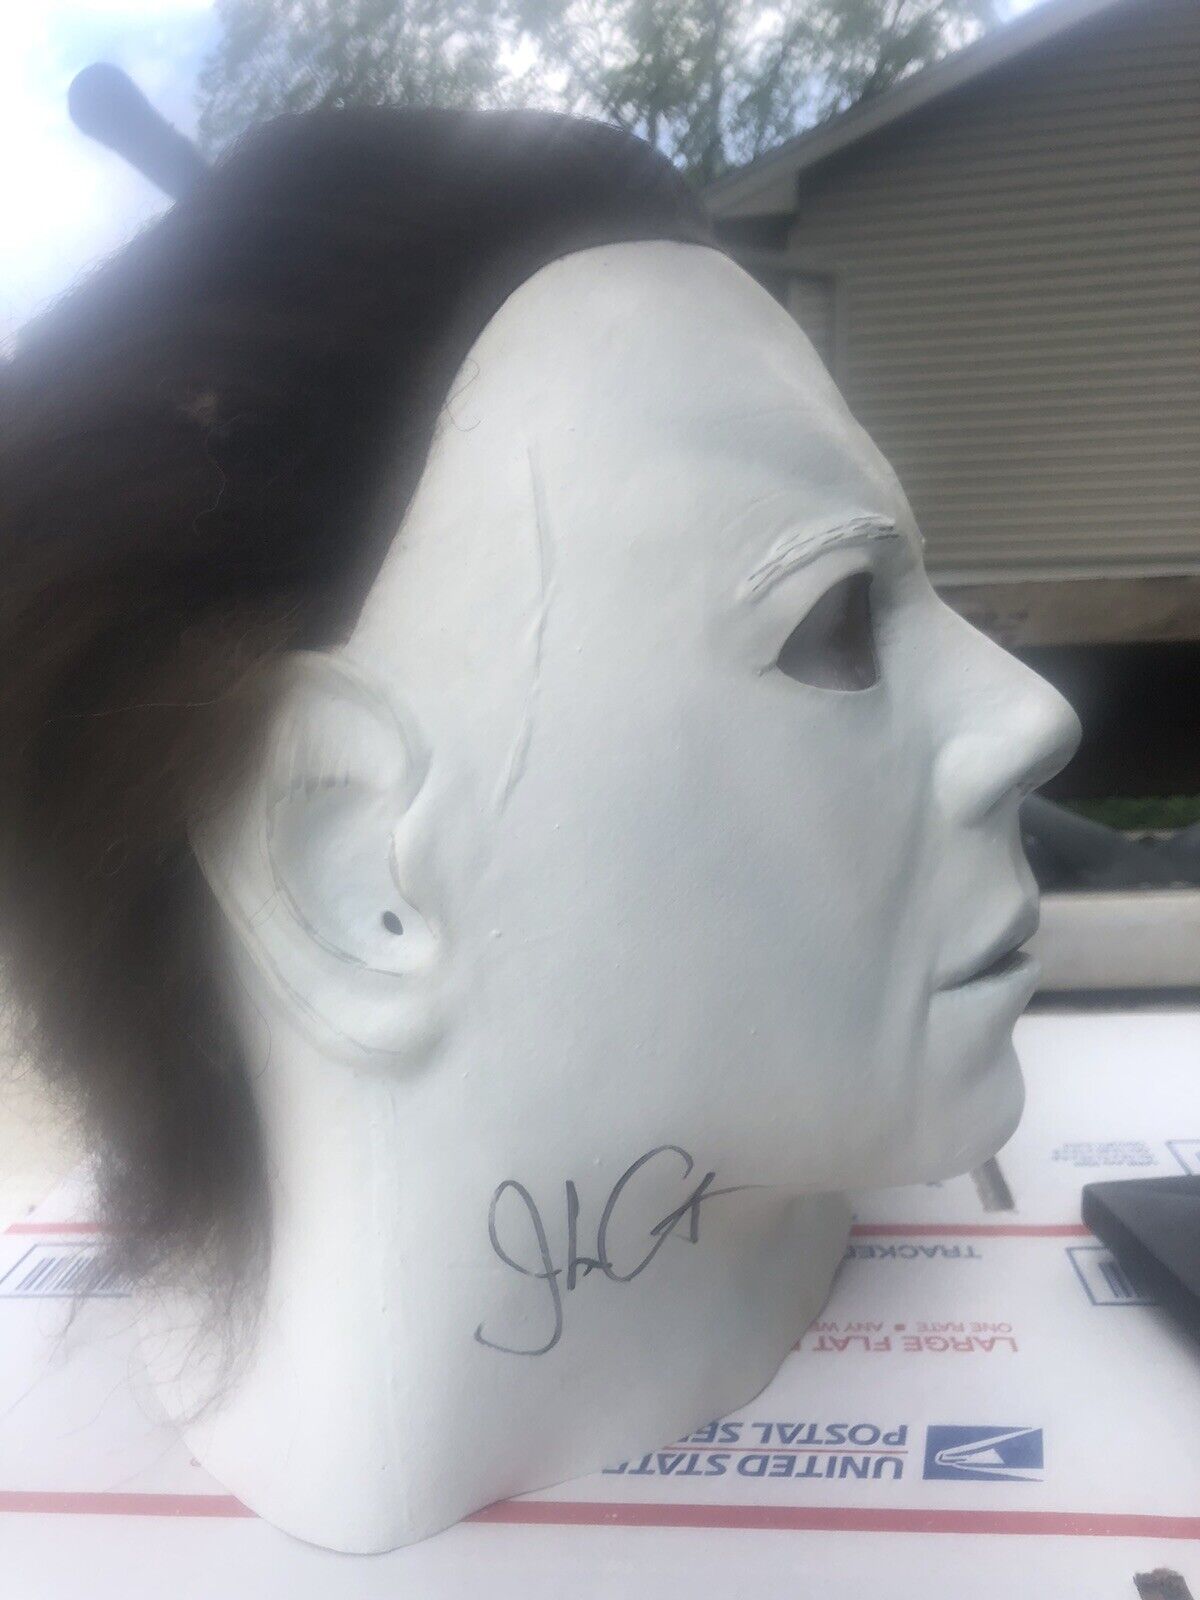 New Trick or Treat Studios Halloween Mask signed by John Carpenter